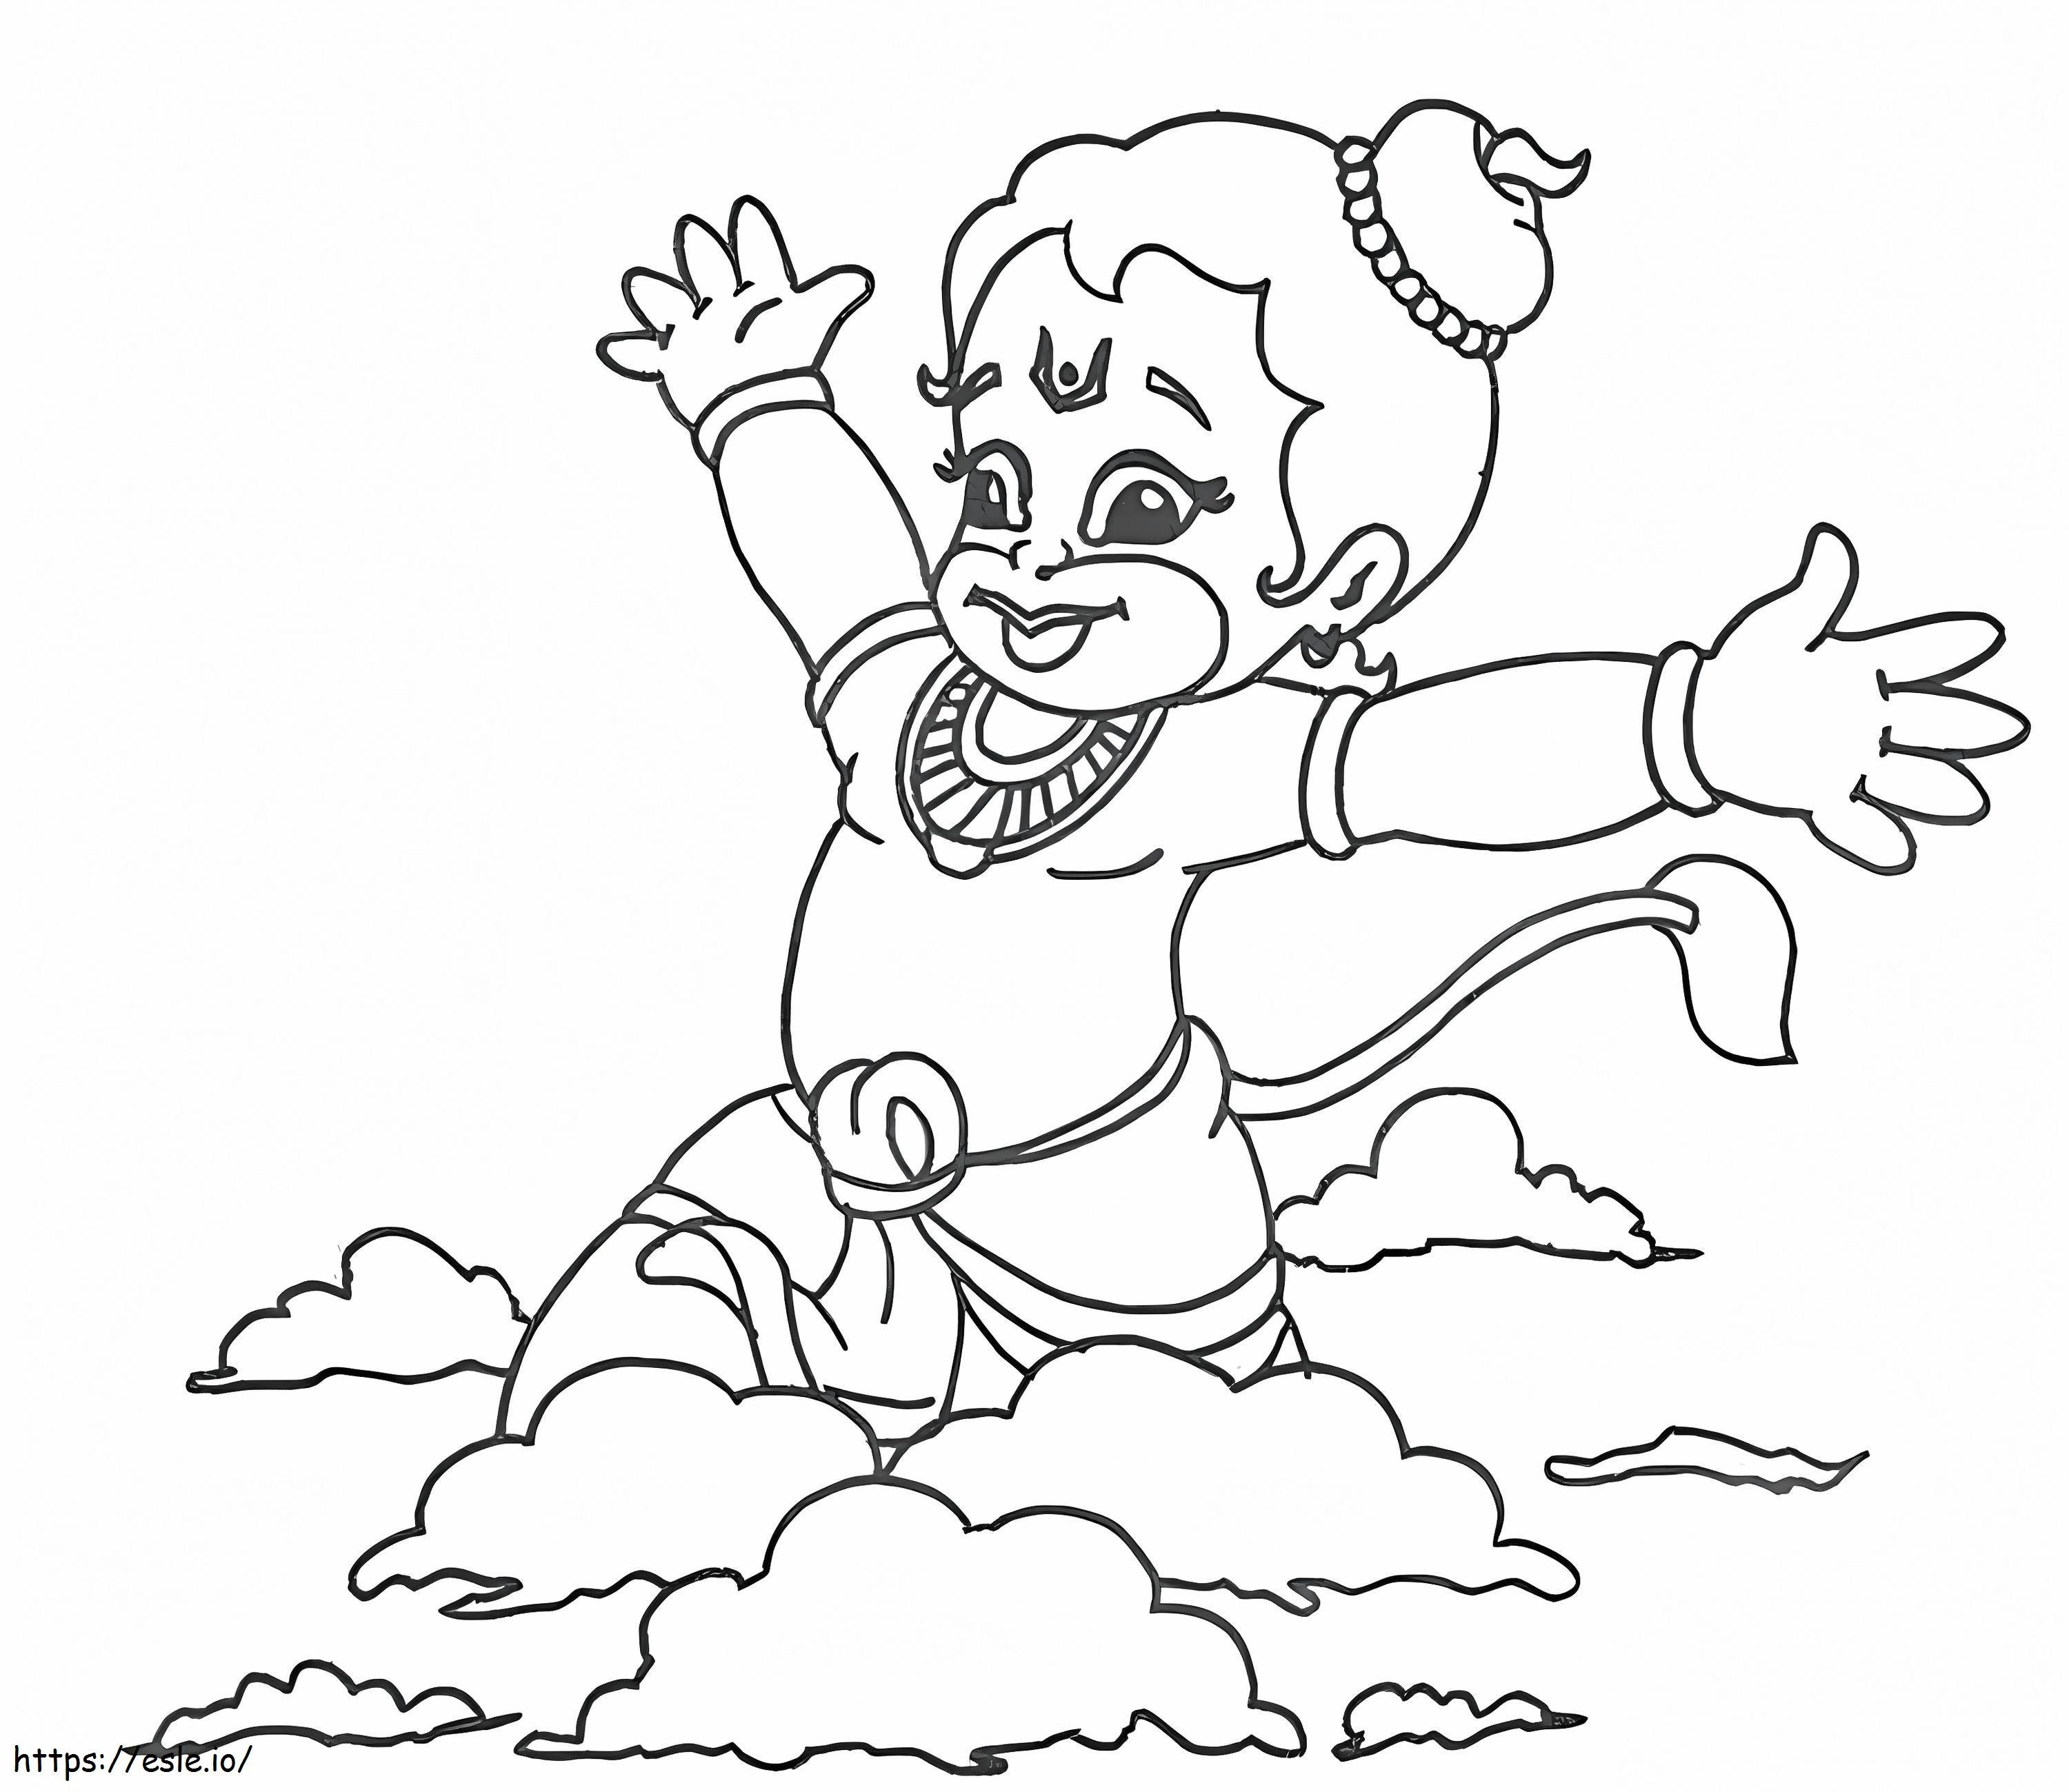 Hanuman Jayanti 1 kleurplaat kleurplaat